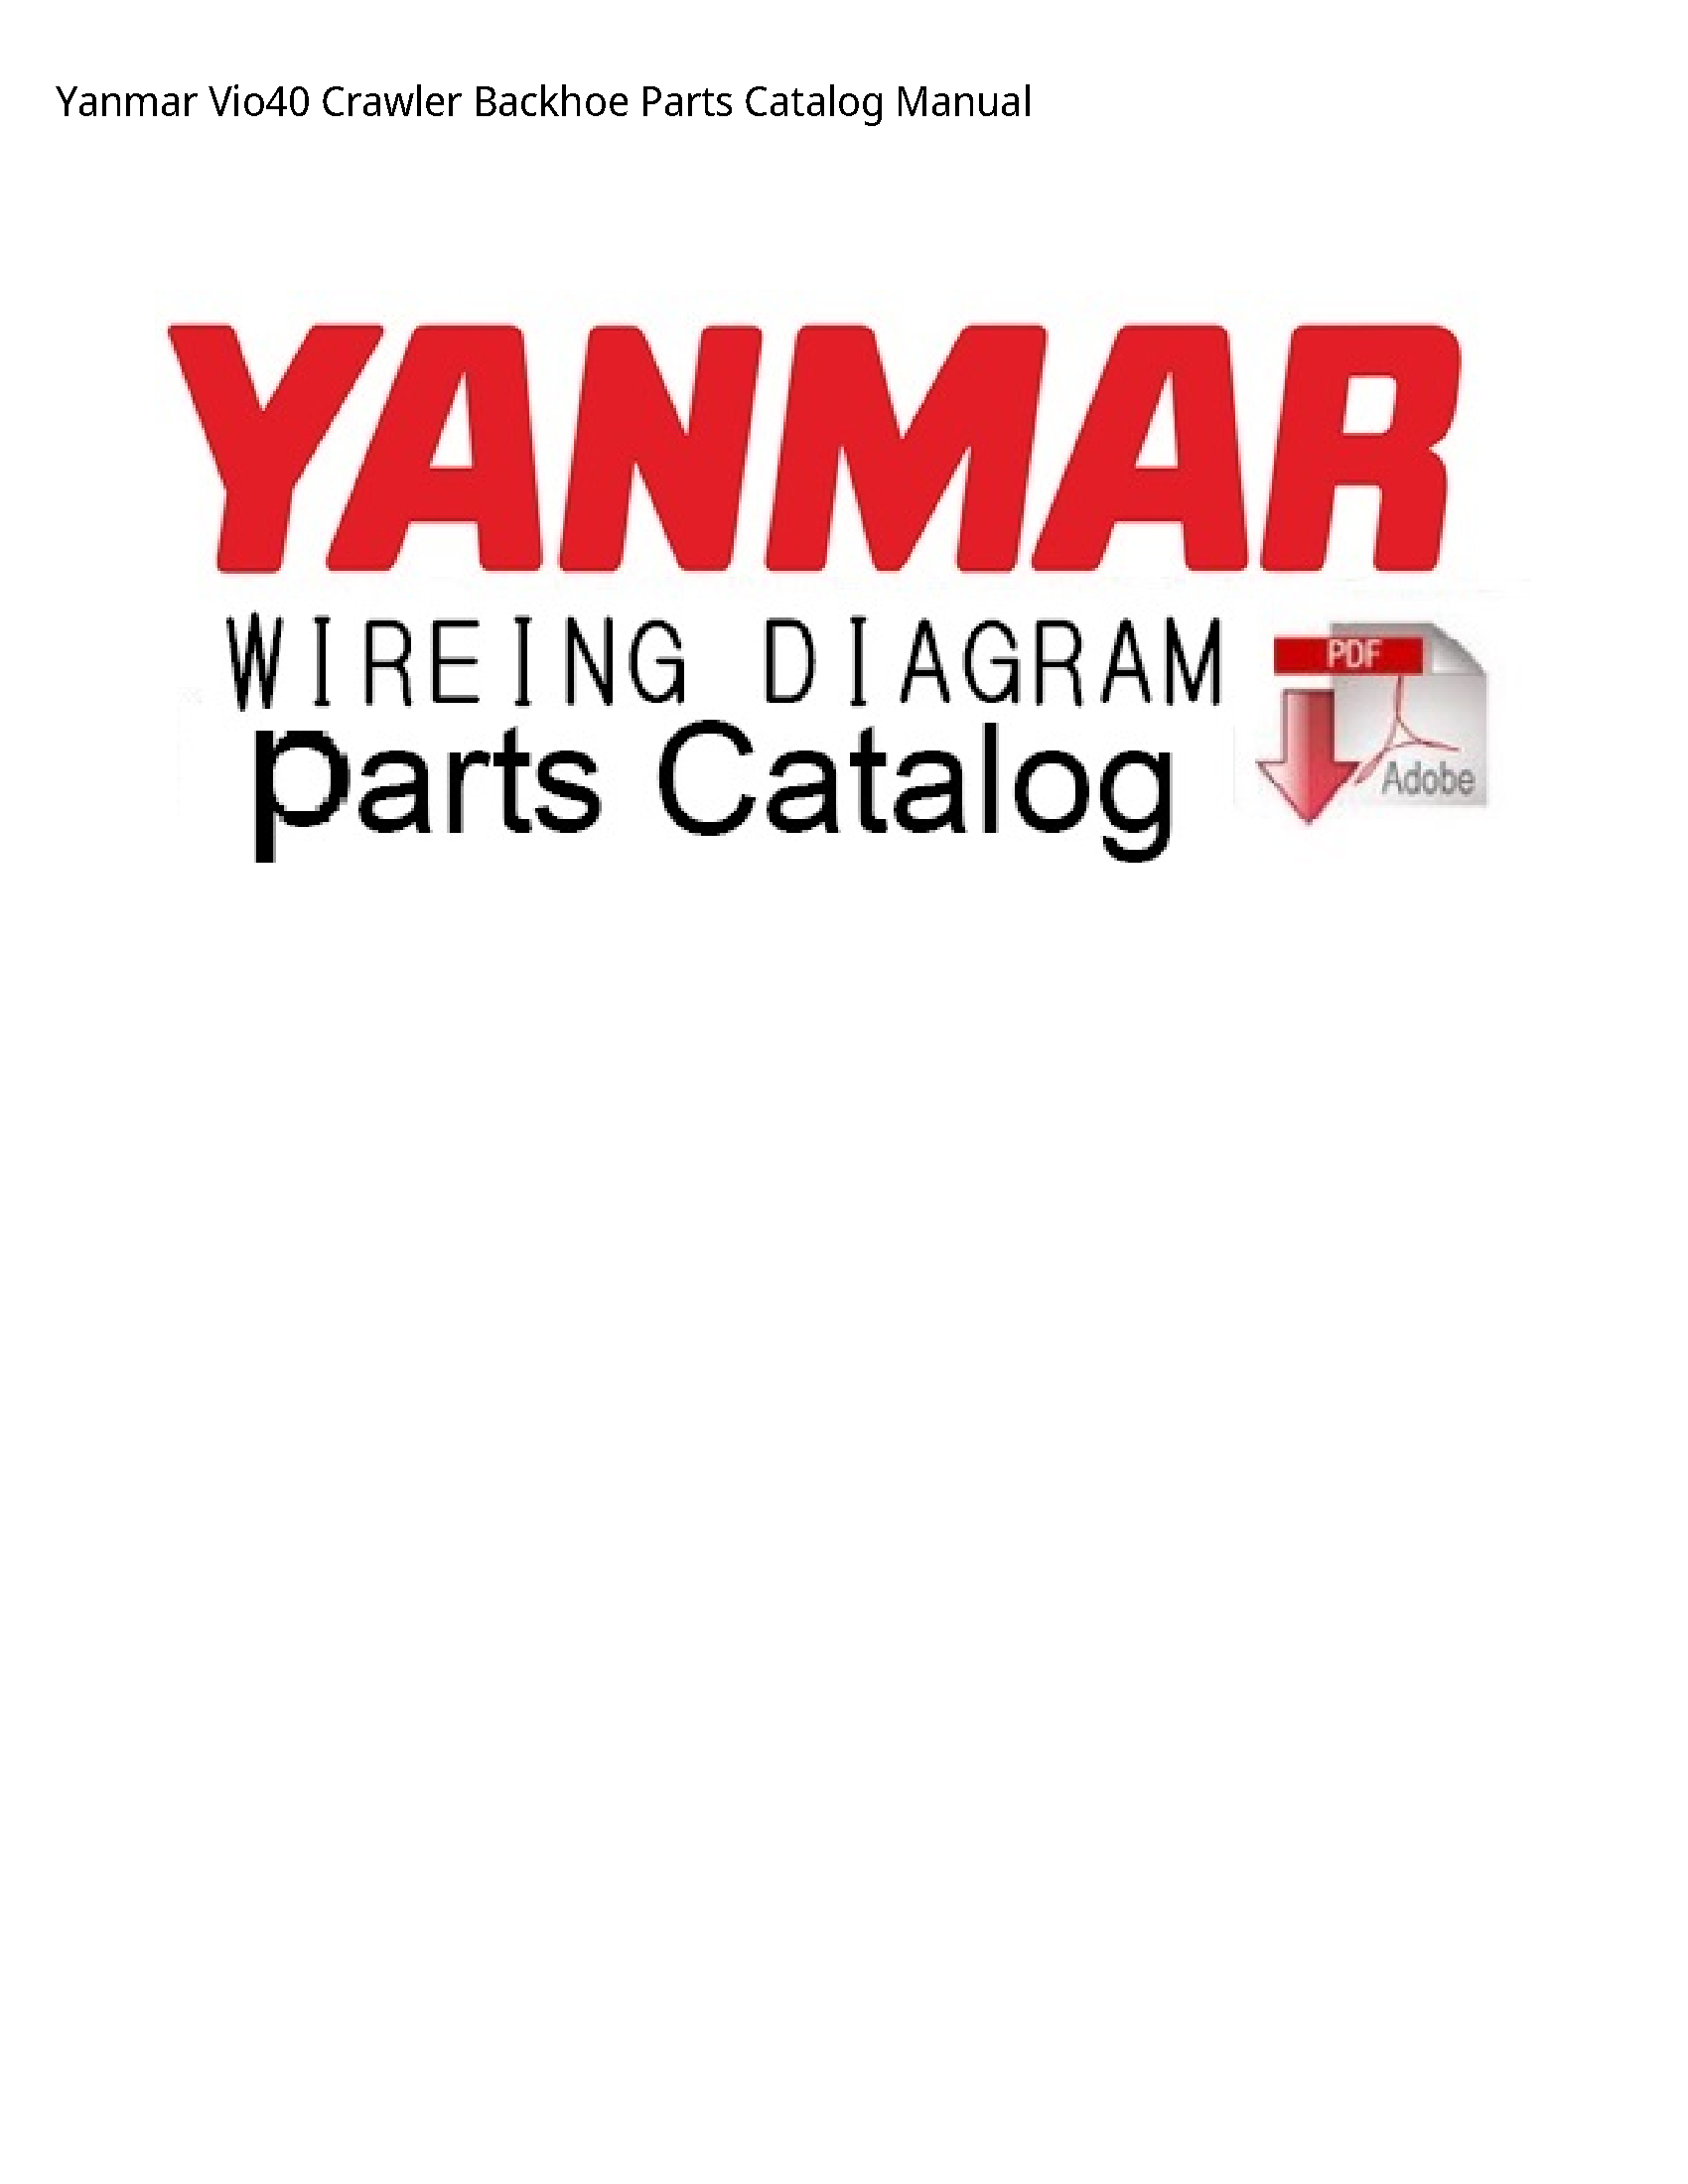 Yanmar Vio40 Crawler Backhoe Parts Catalog manual